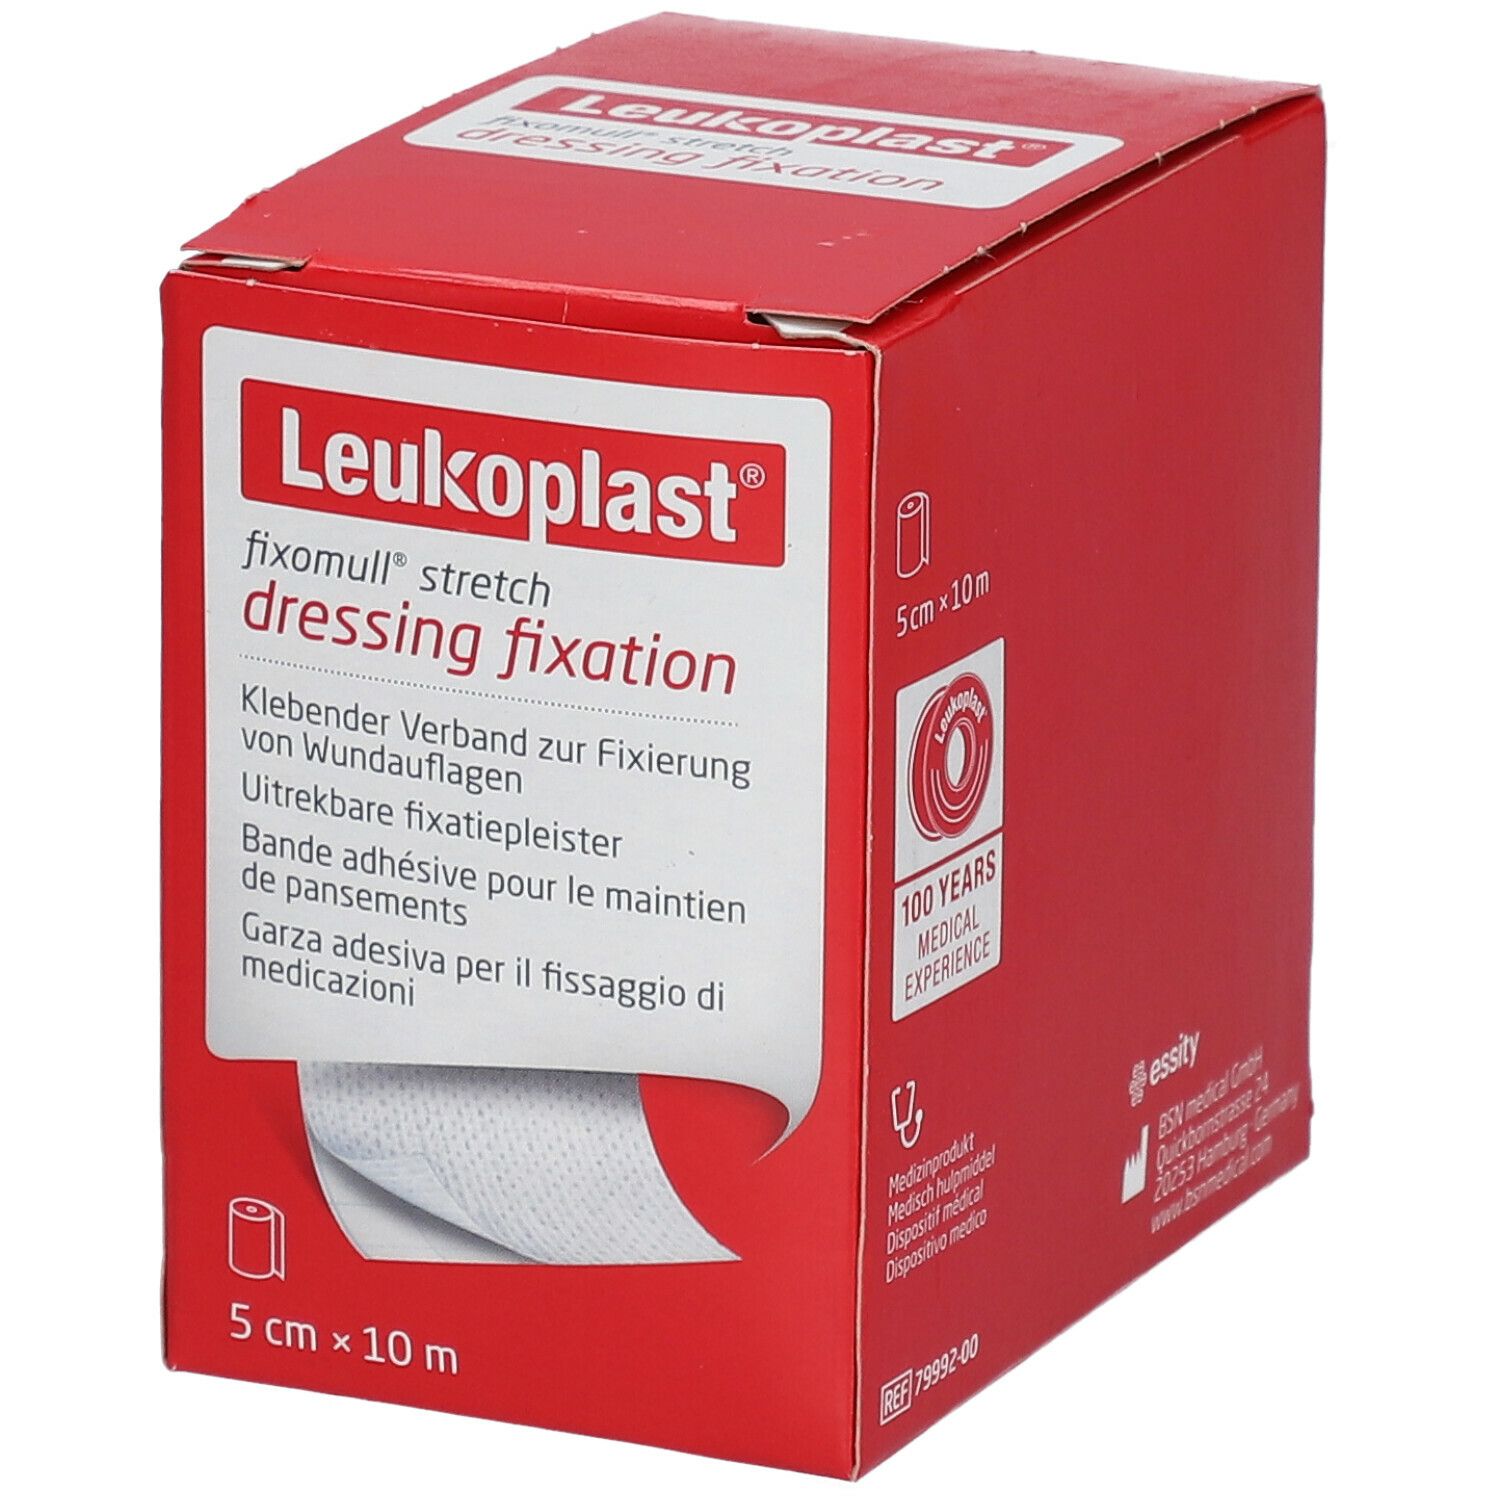 Leukoplast Fixomull® Stretch 5 cm x 10 m